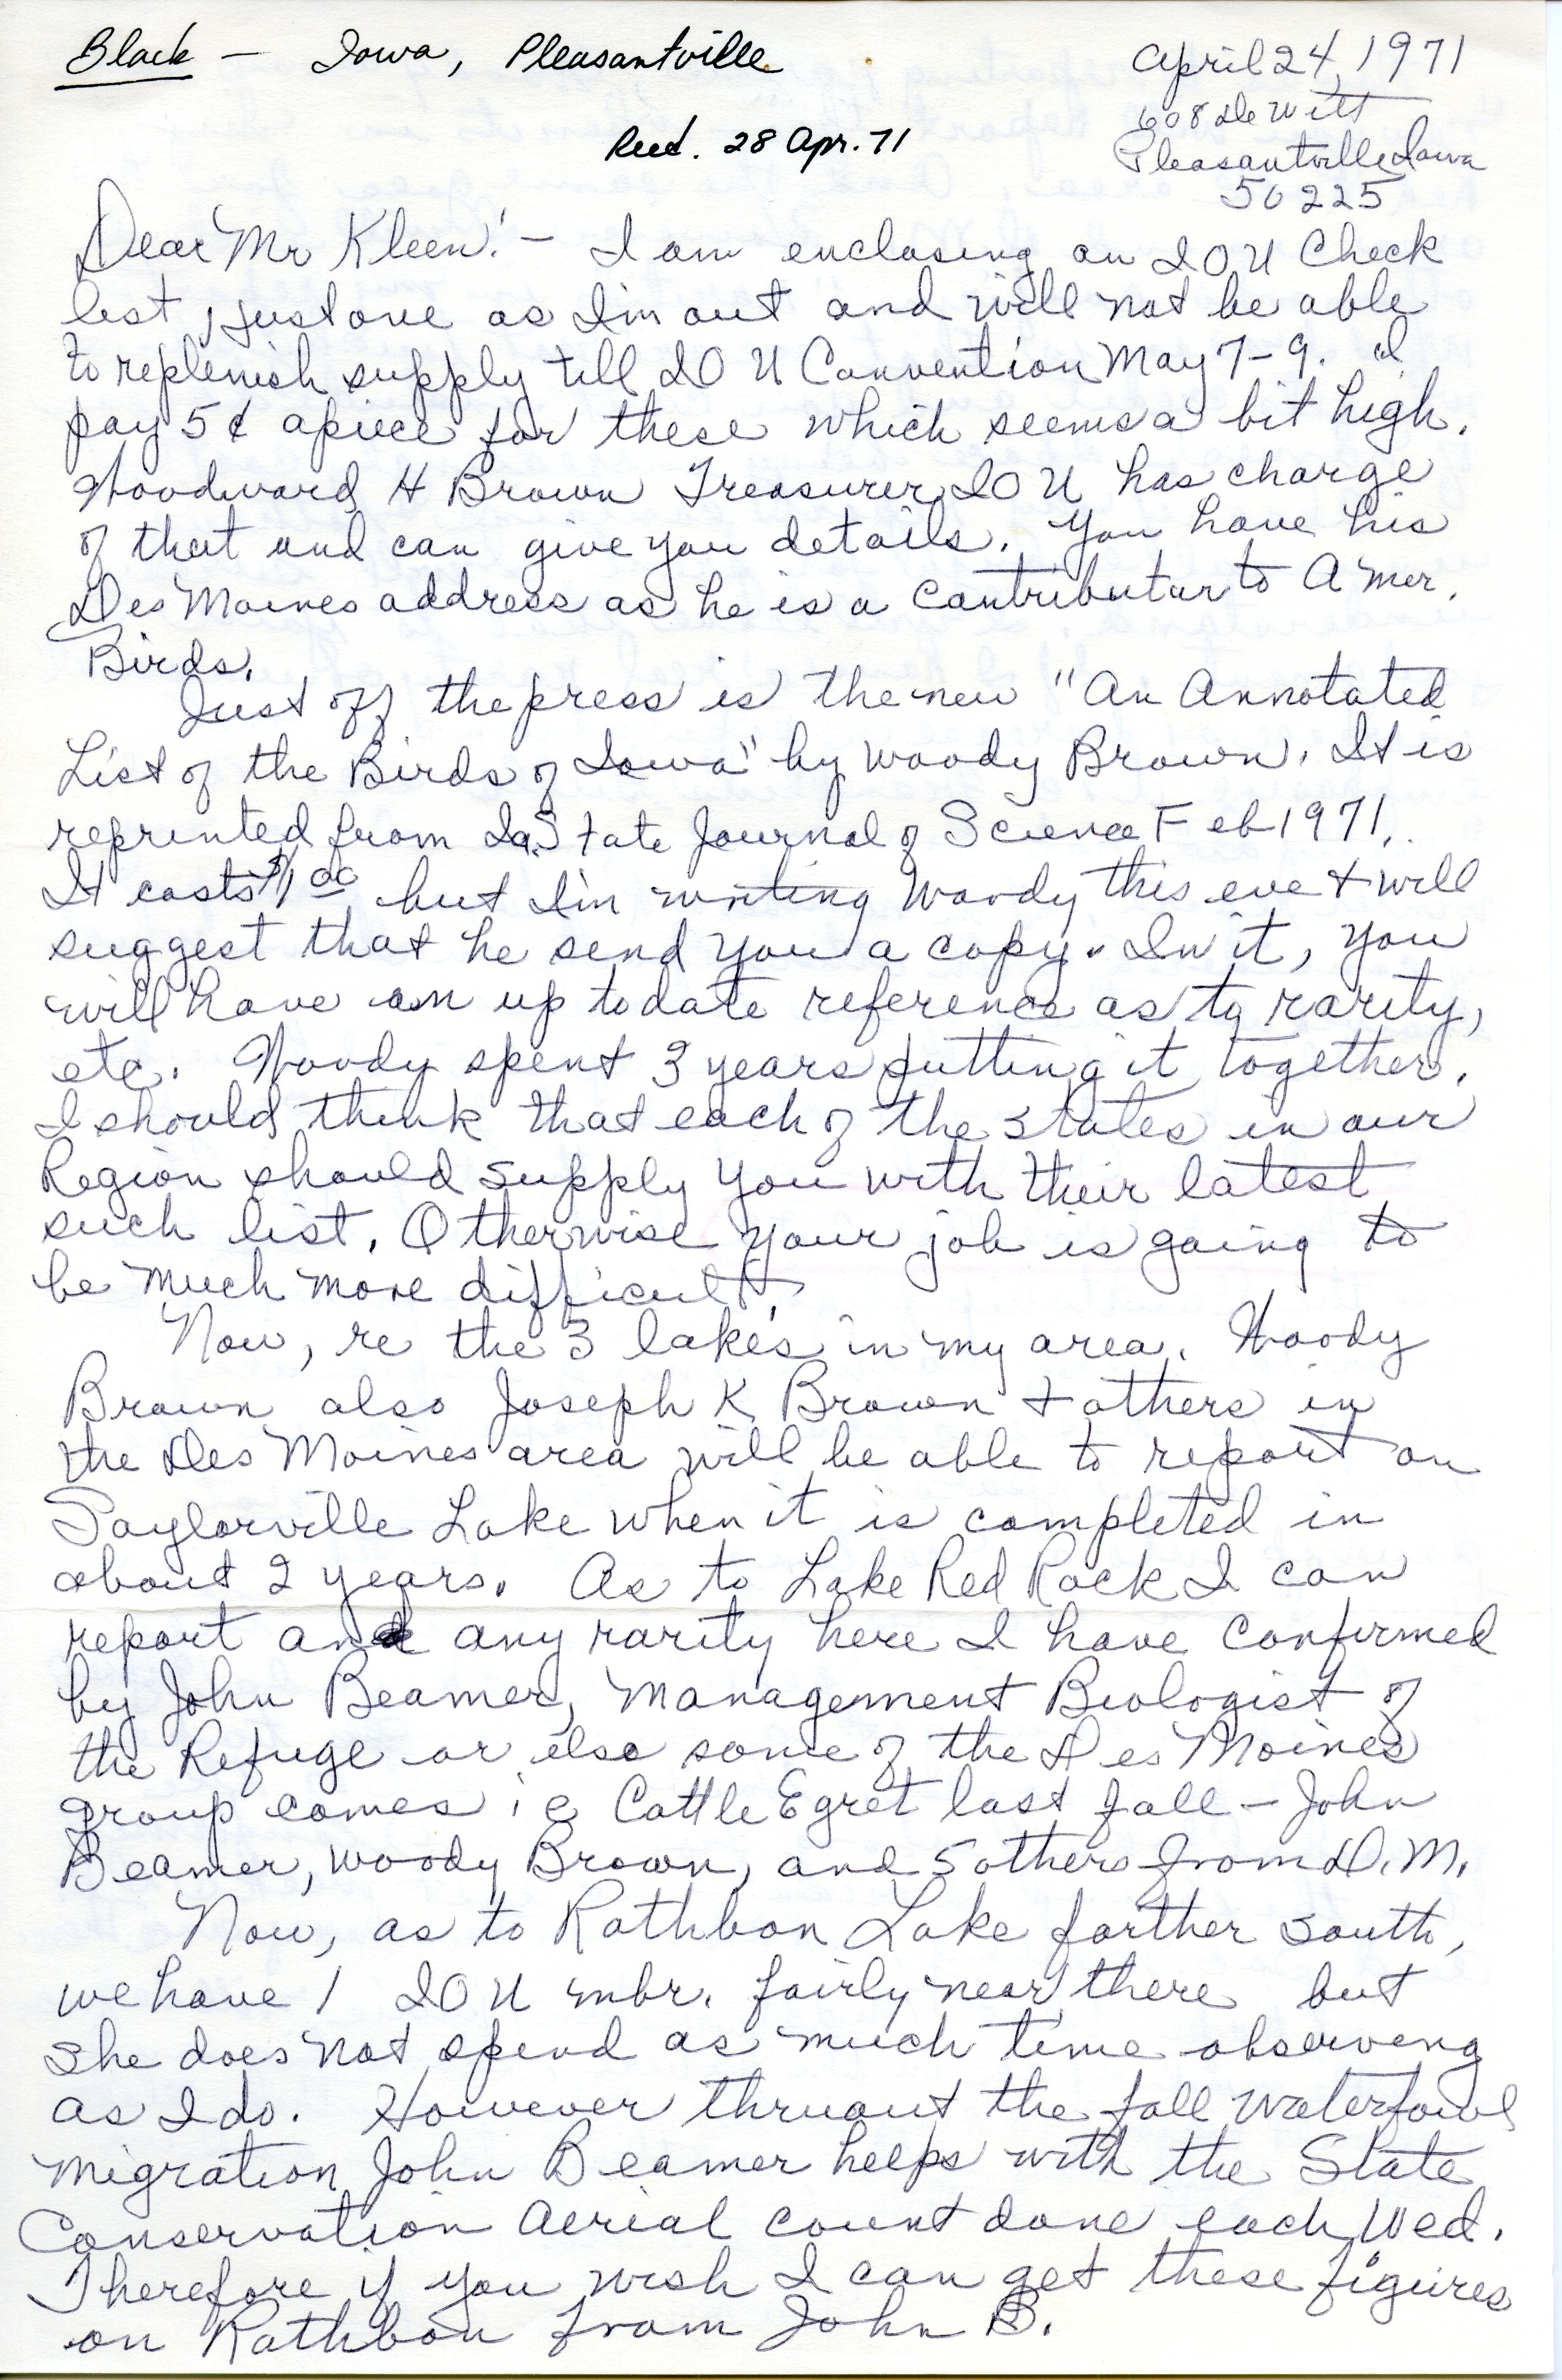 Gladys Black letter to Vernon Kleen regarding activities of Iowa Ornithologists' Union members, April 24, 1971